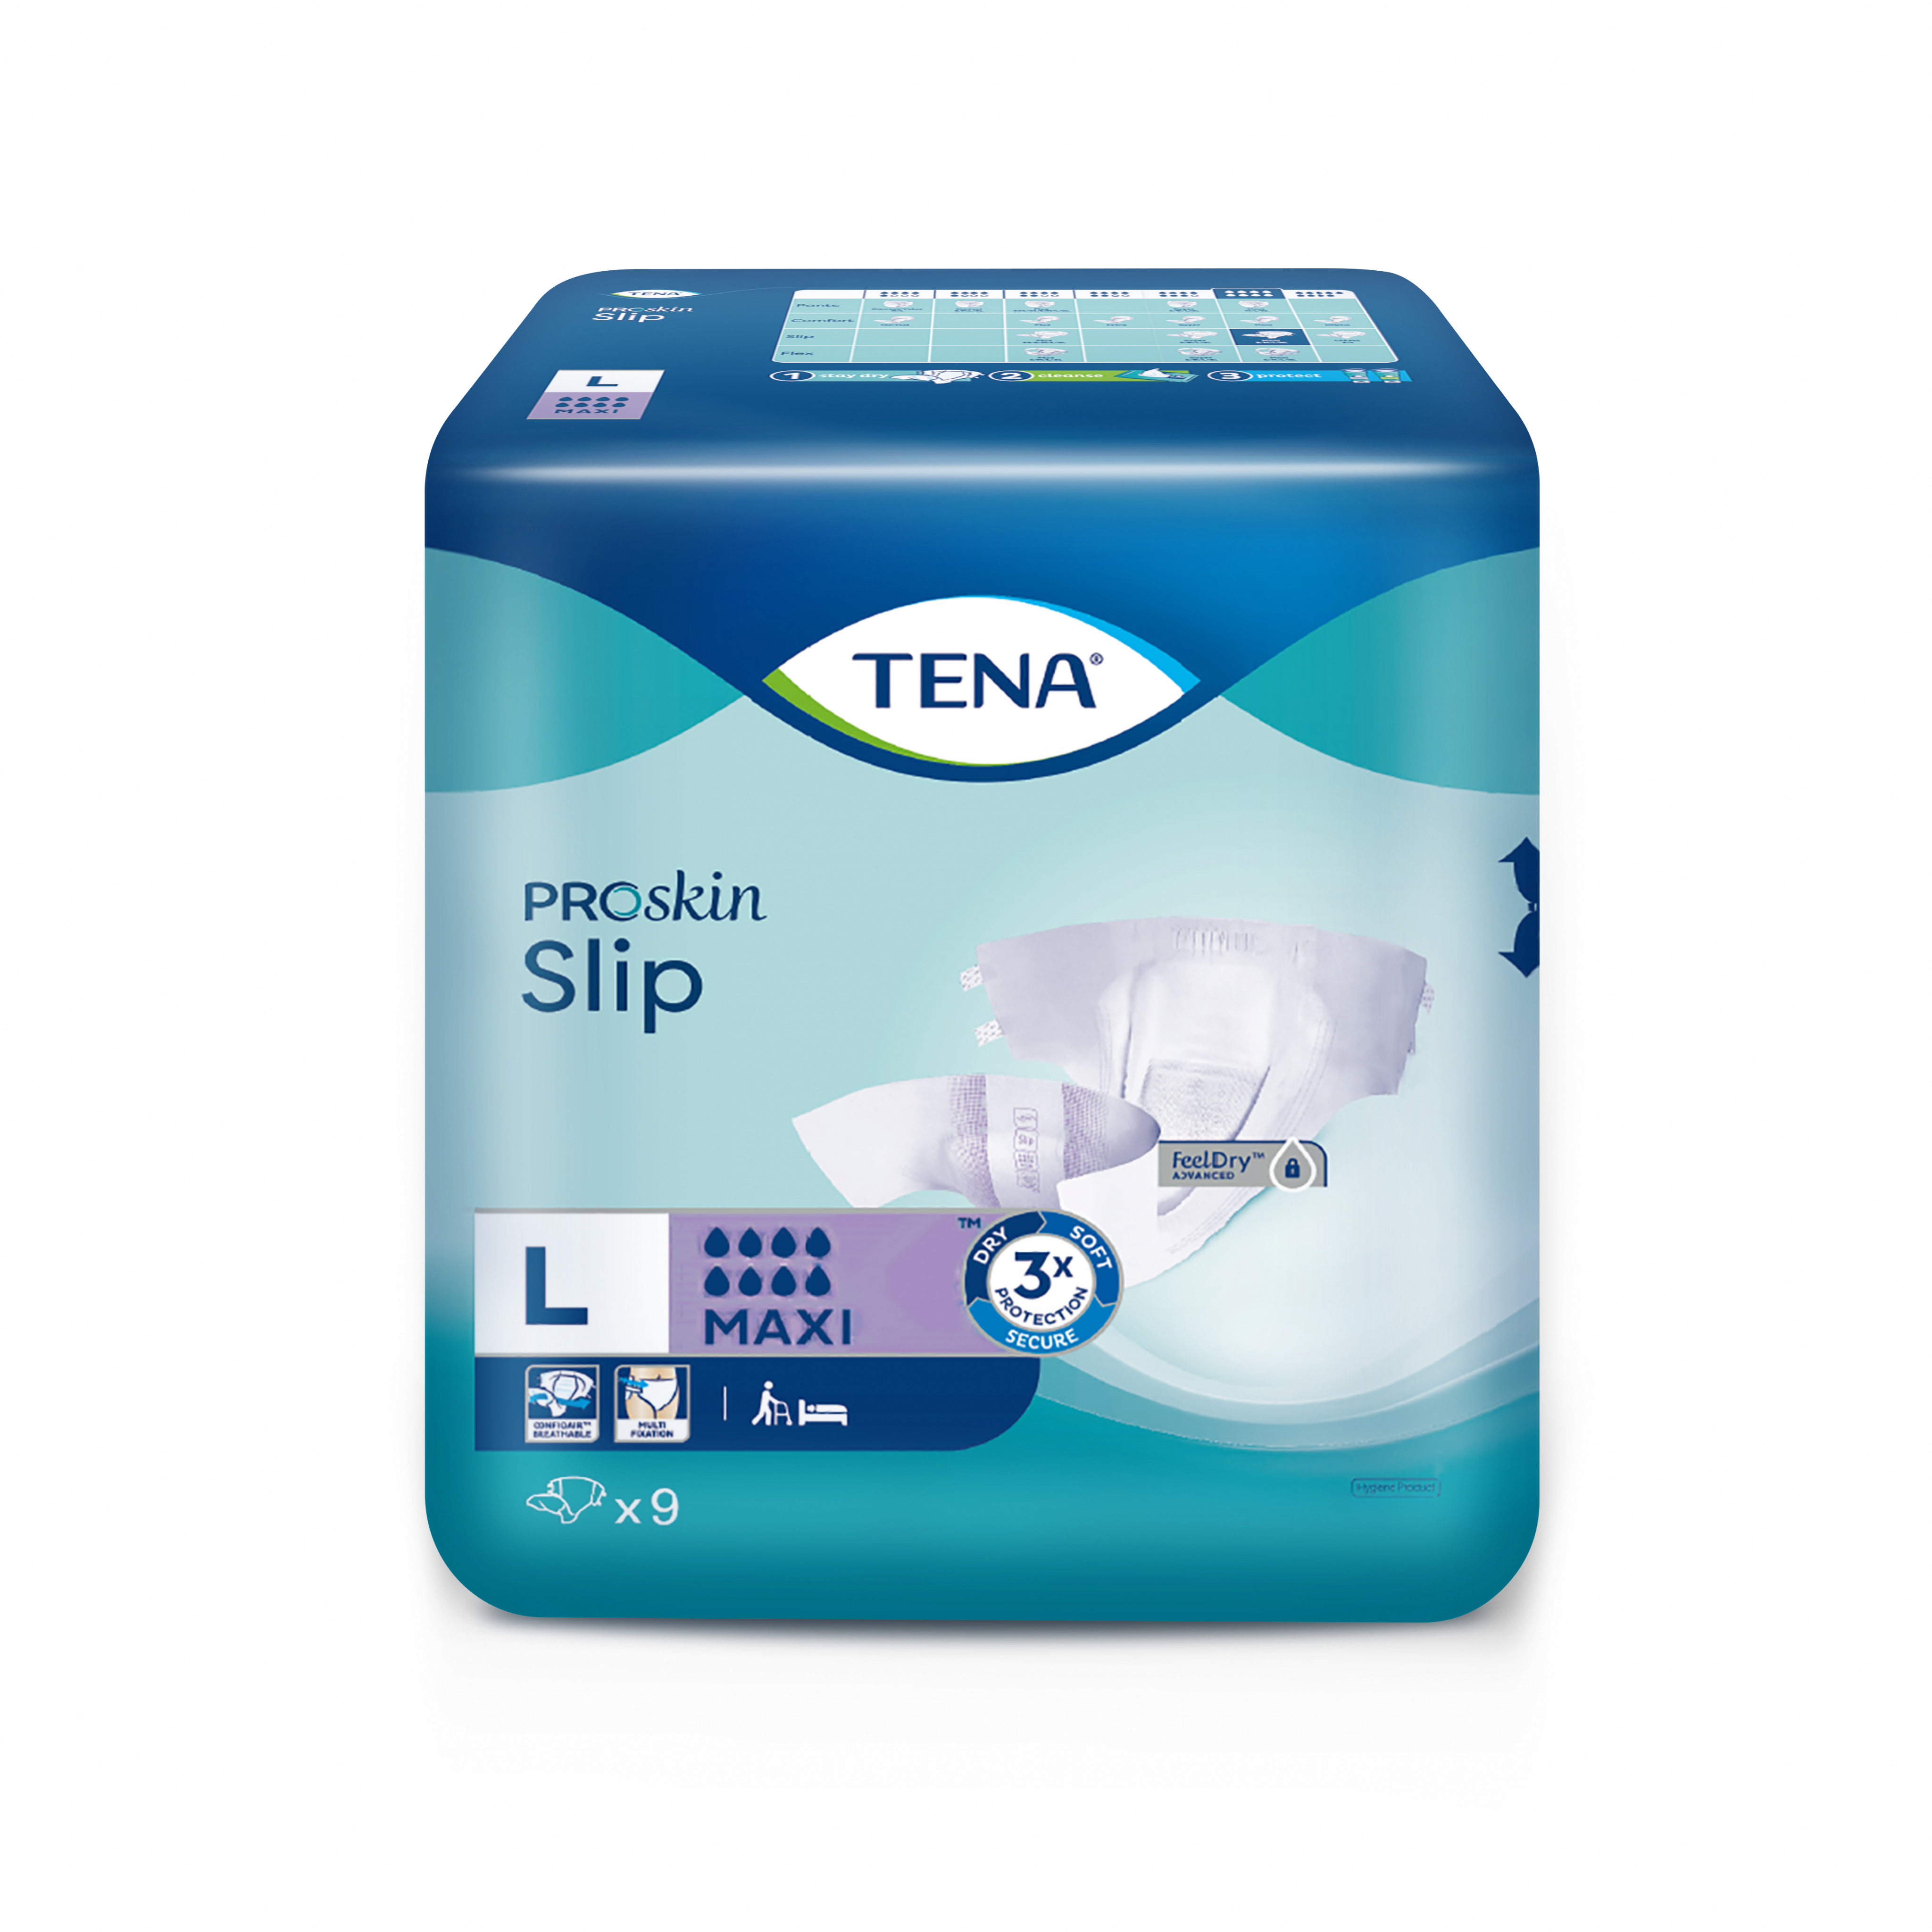 TENA PROskin Slip Maxi Large image 0